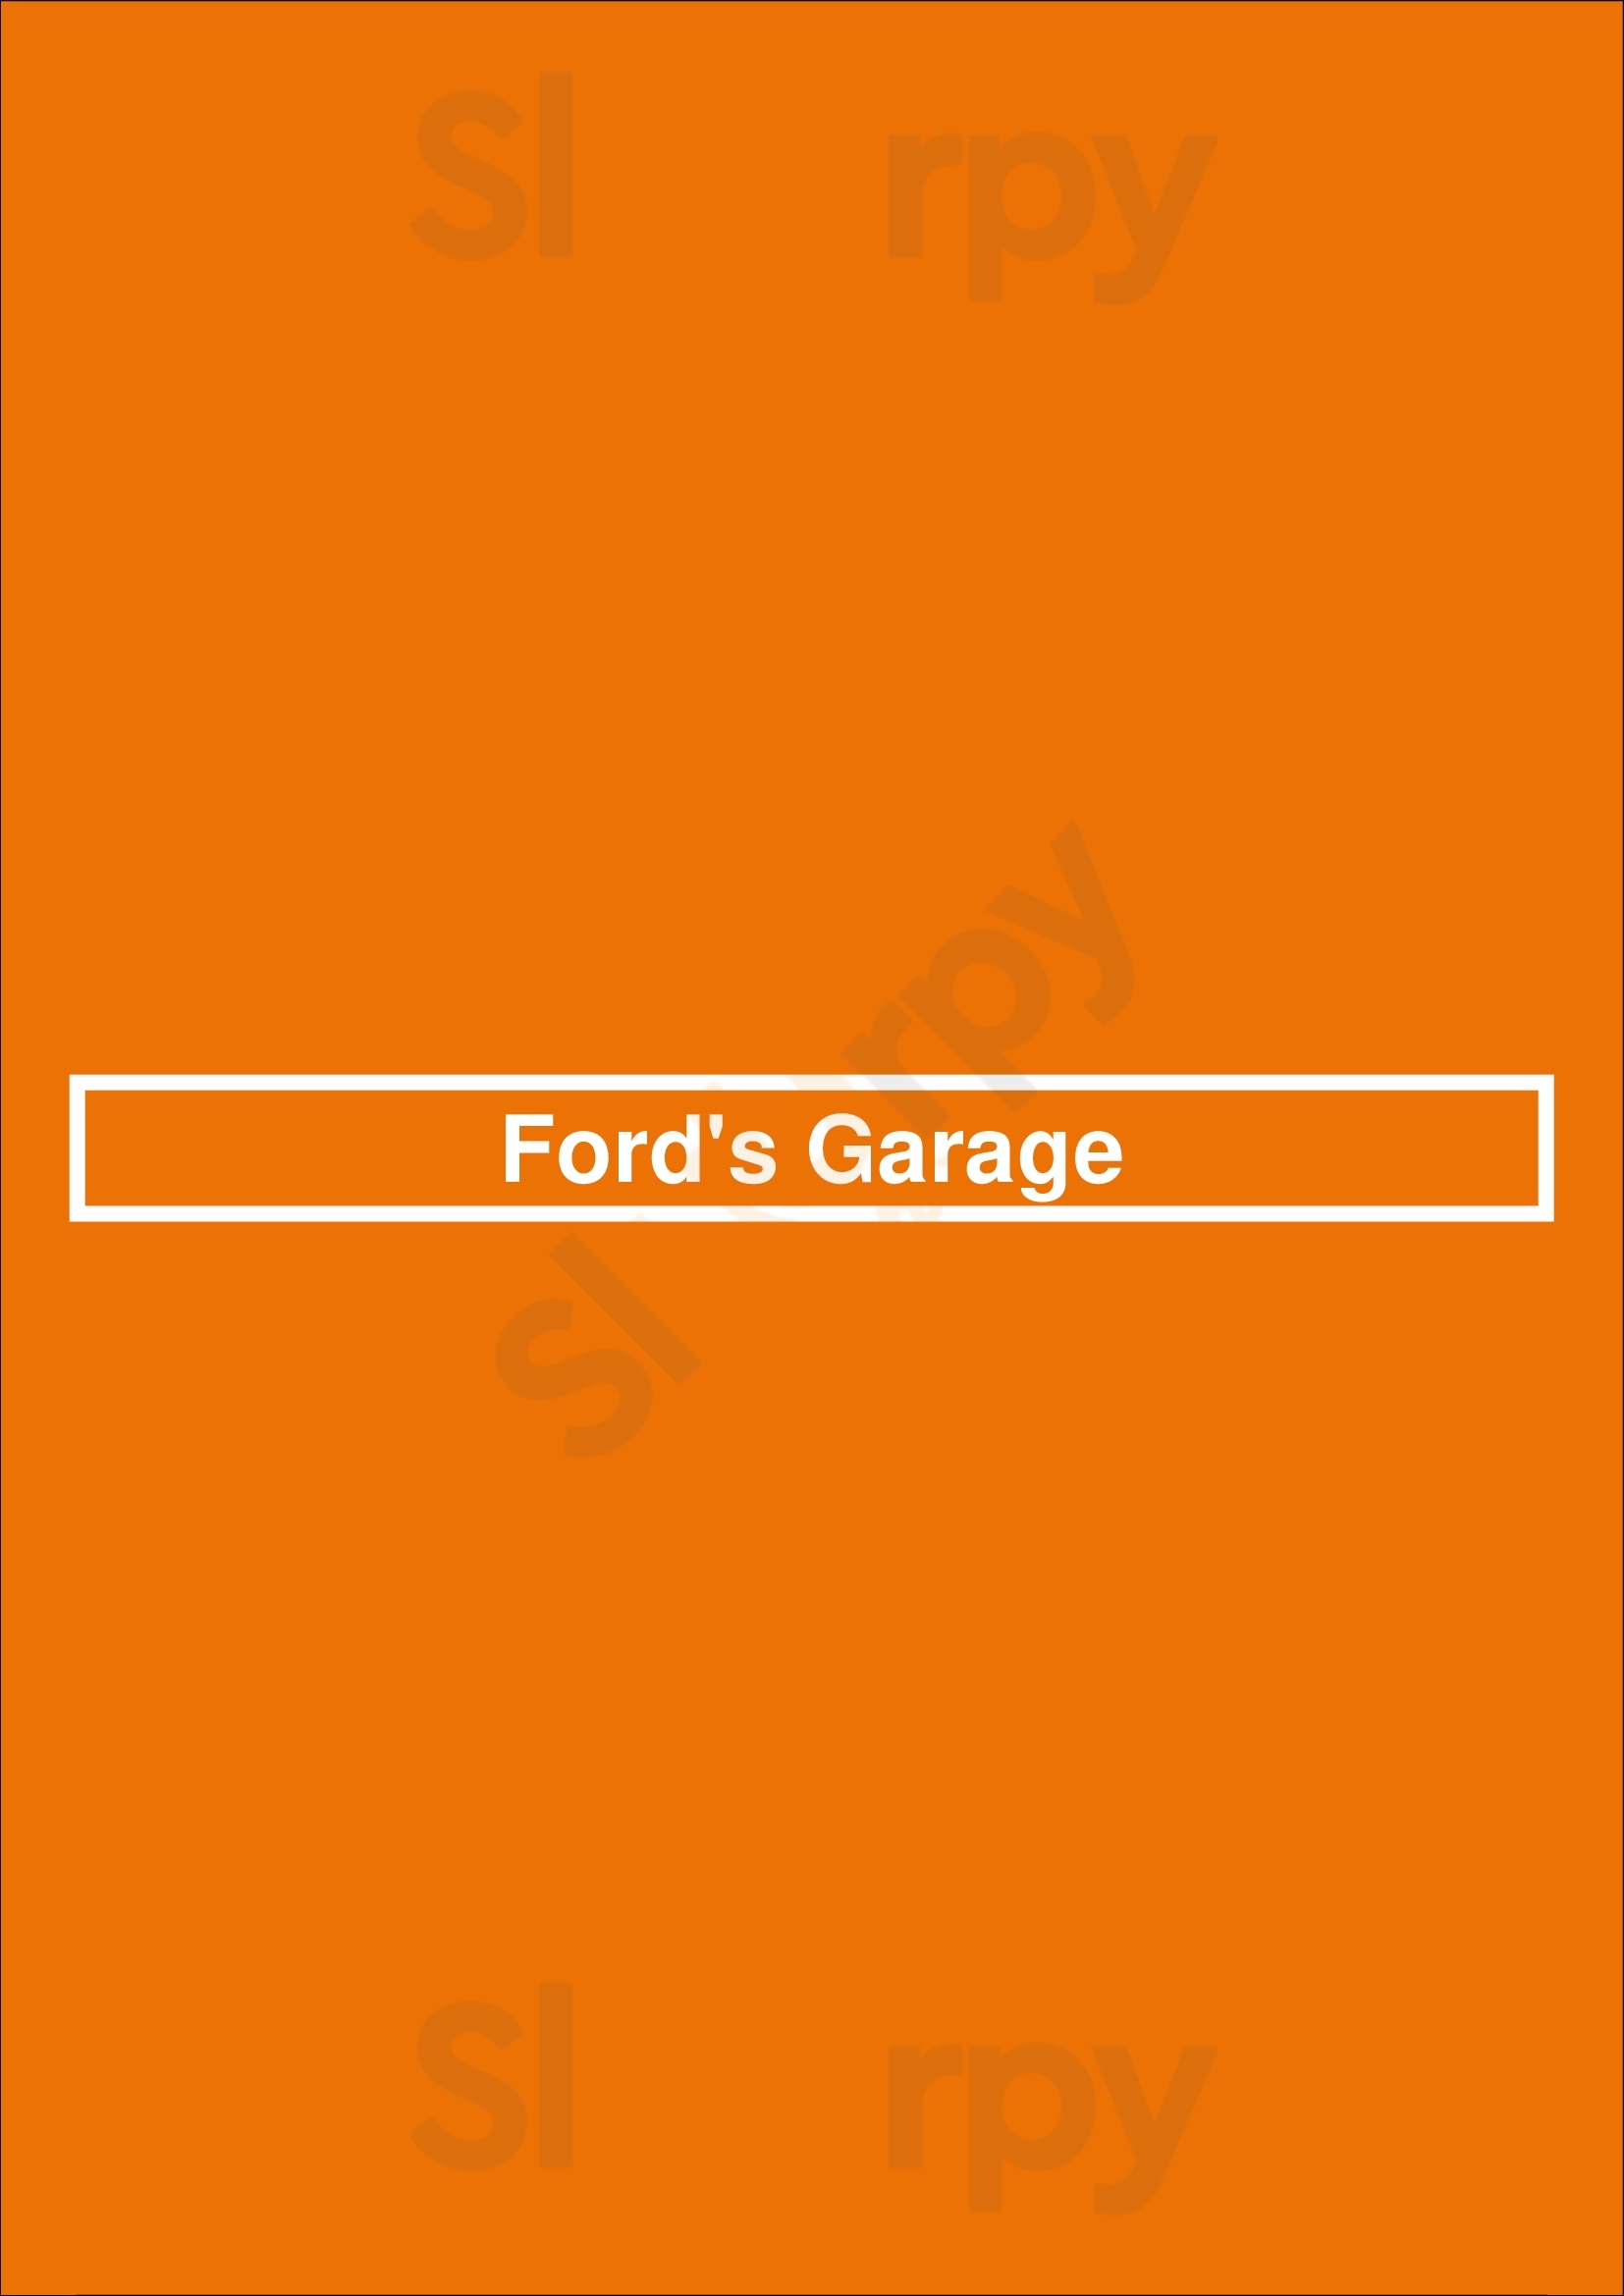 Ford's Garage Orlando Orlando Menu - 1